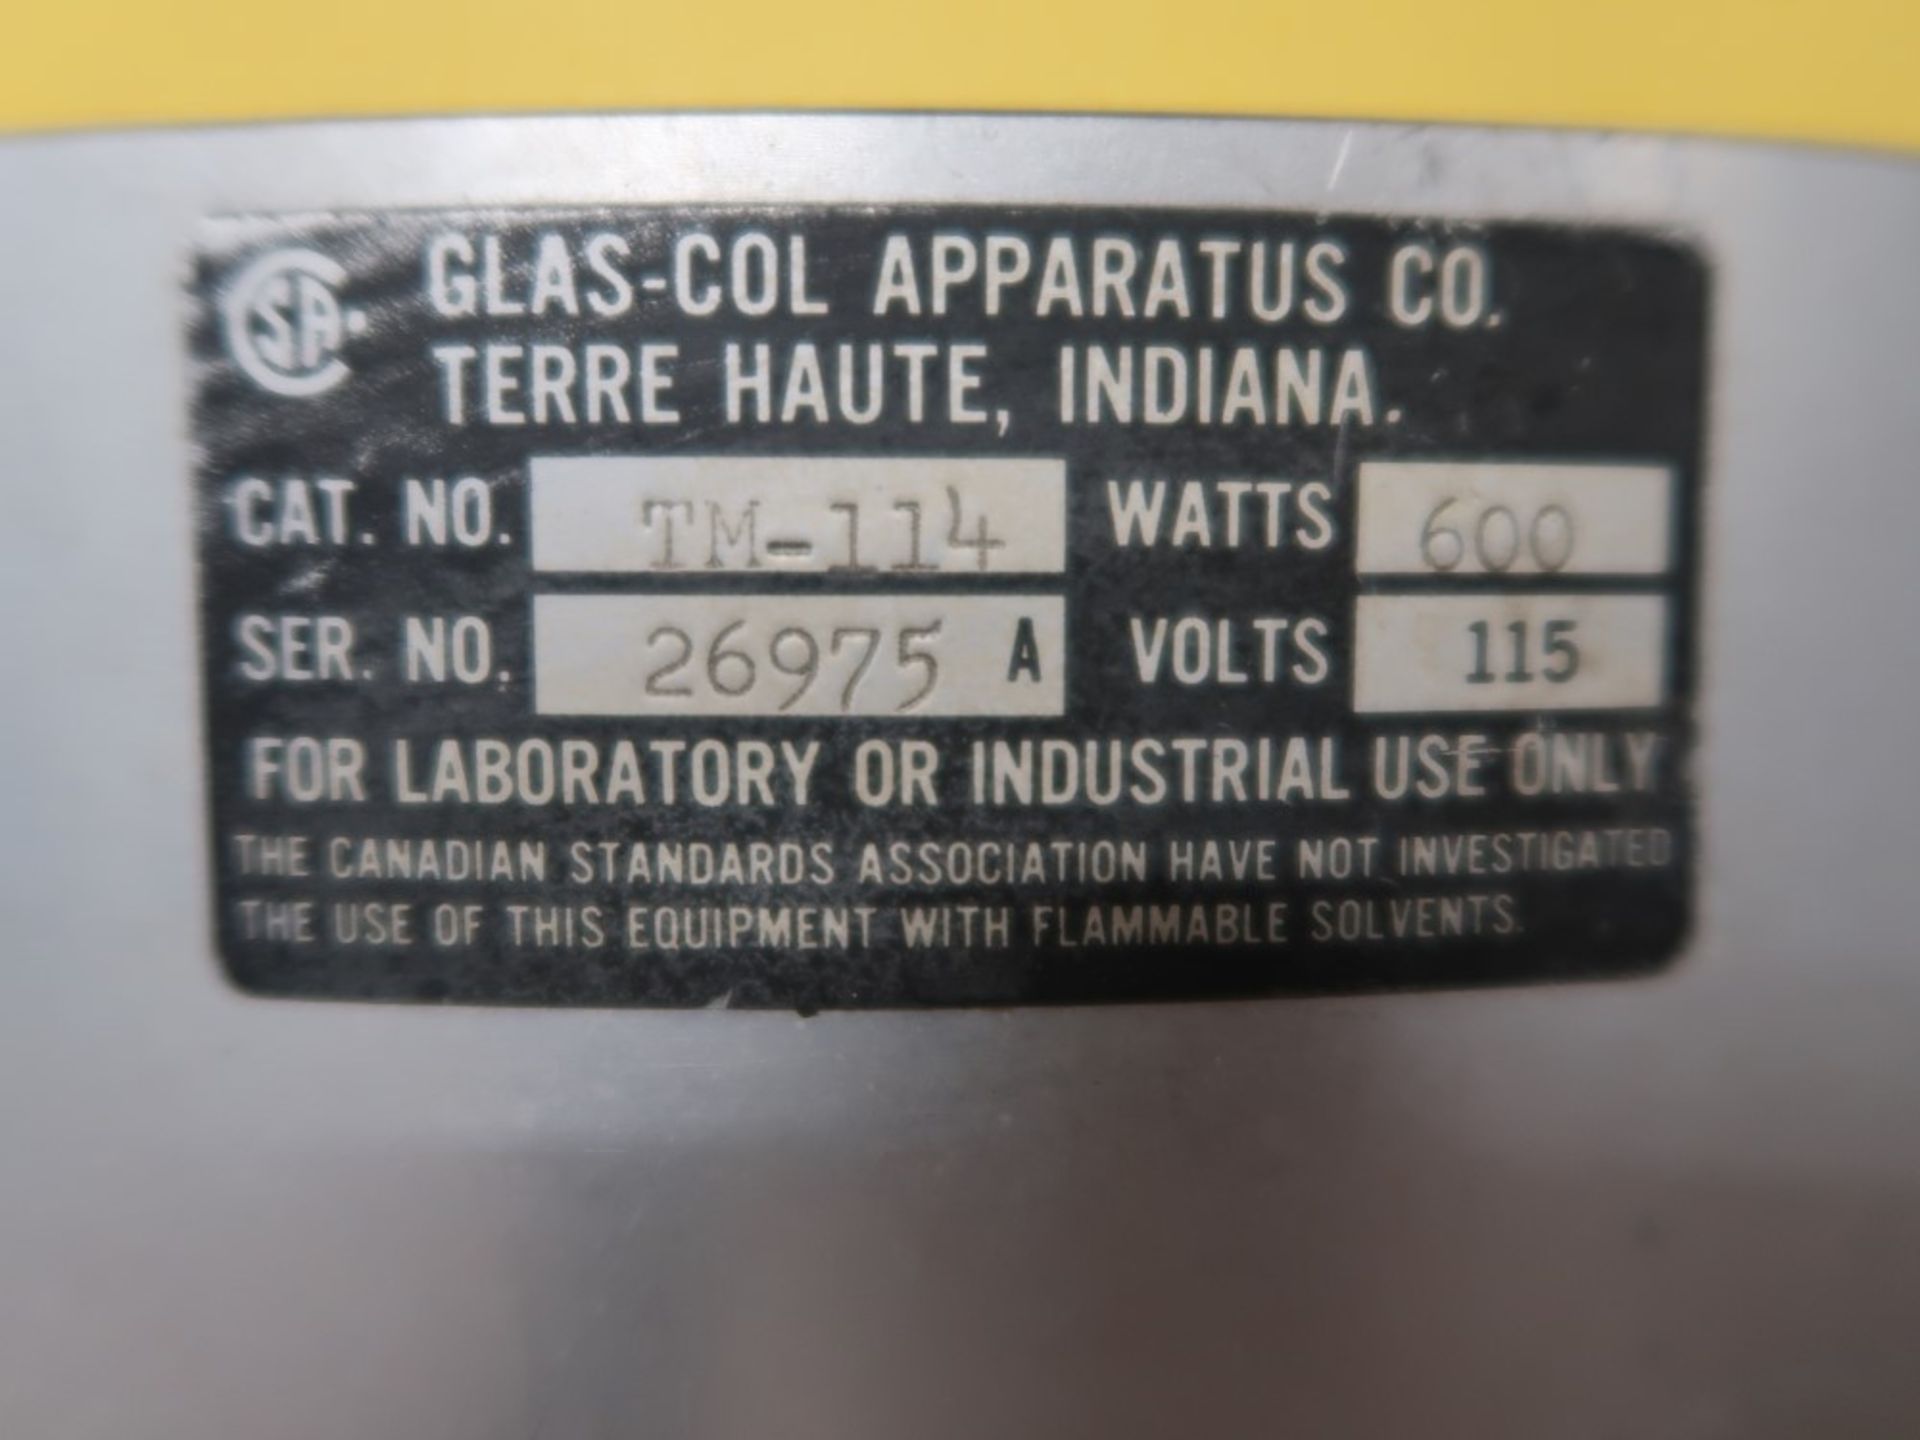 9" Dia Glas-ColApprataus Botton Heating Mantle w/ LG 5000 ML 3 Neck Flask S/N 26975 600 Watts - Image 3 of 3